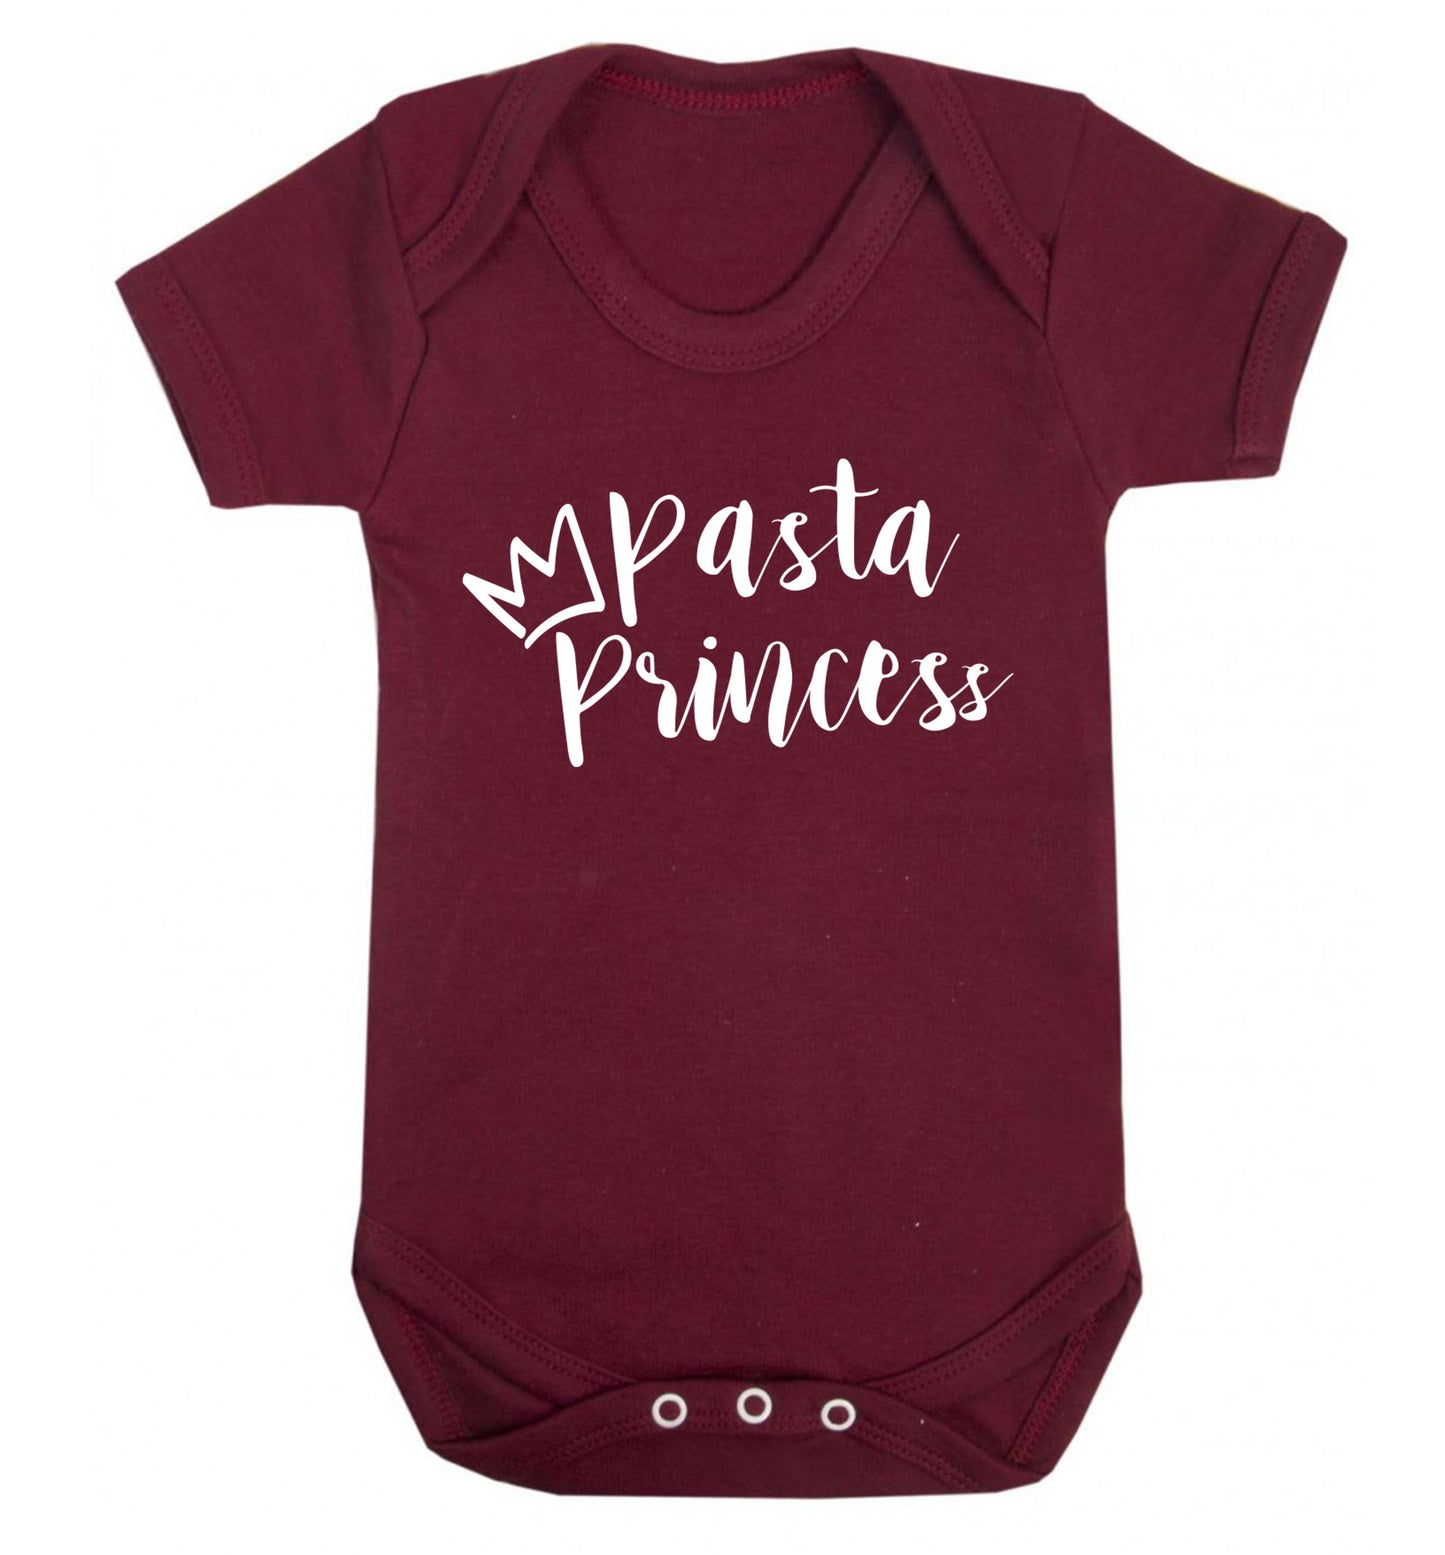 Pasta Princess Baby Vest maroon 18-24 months